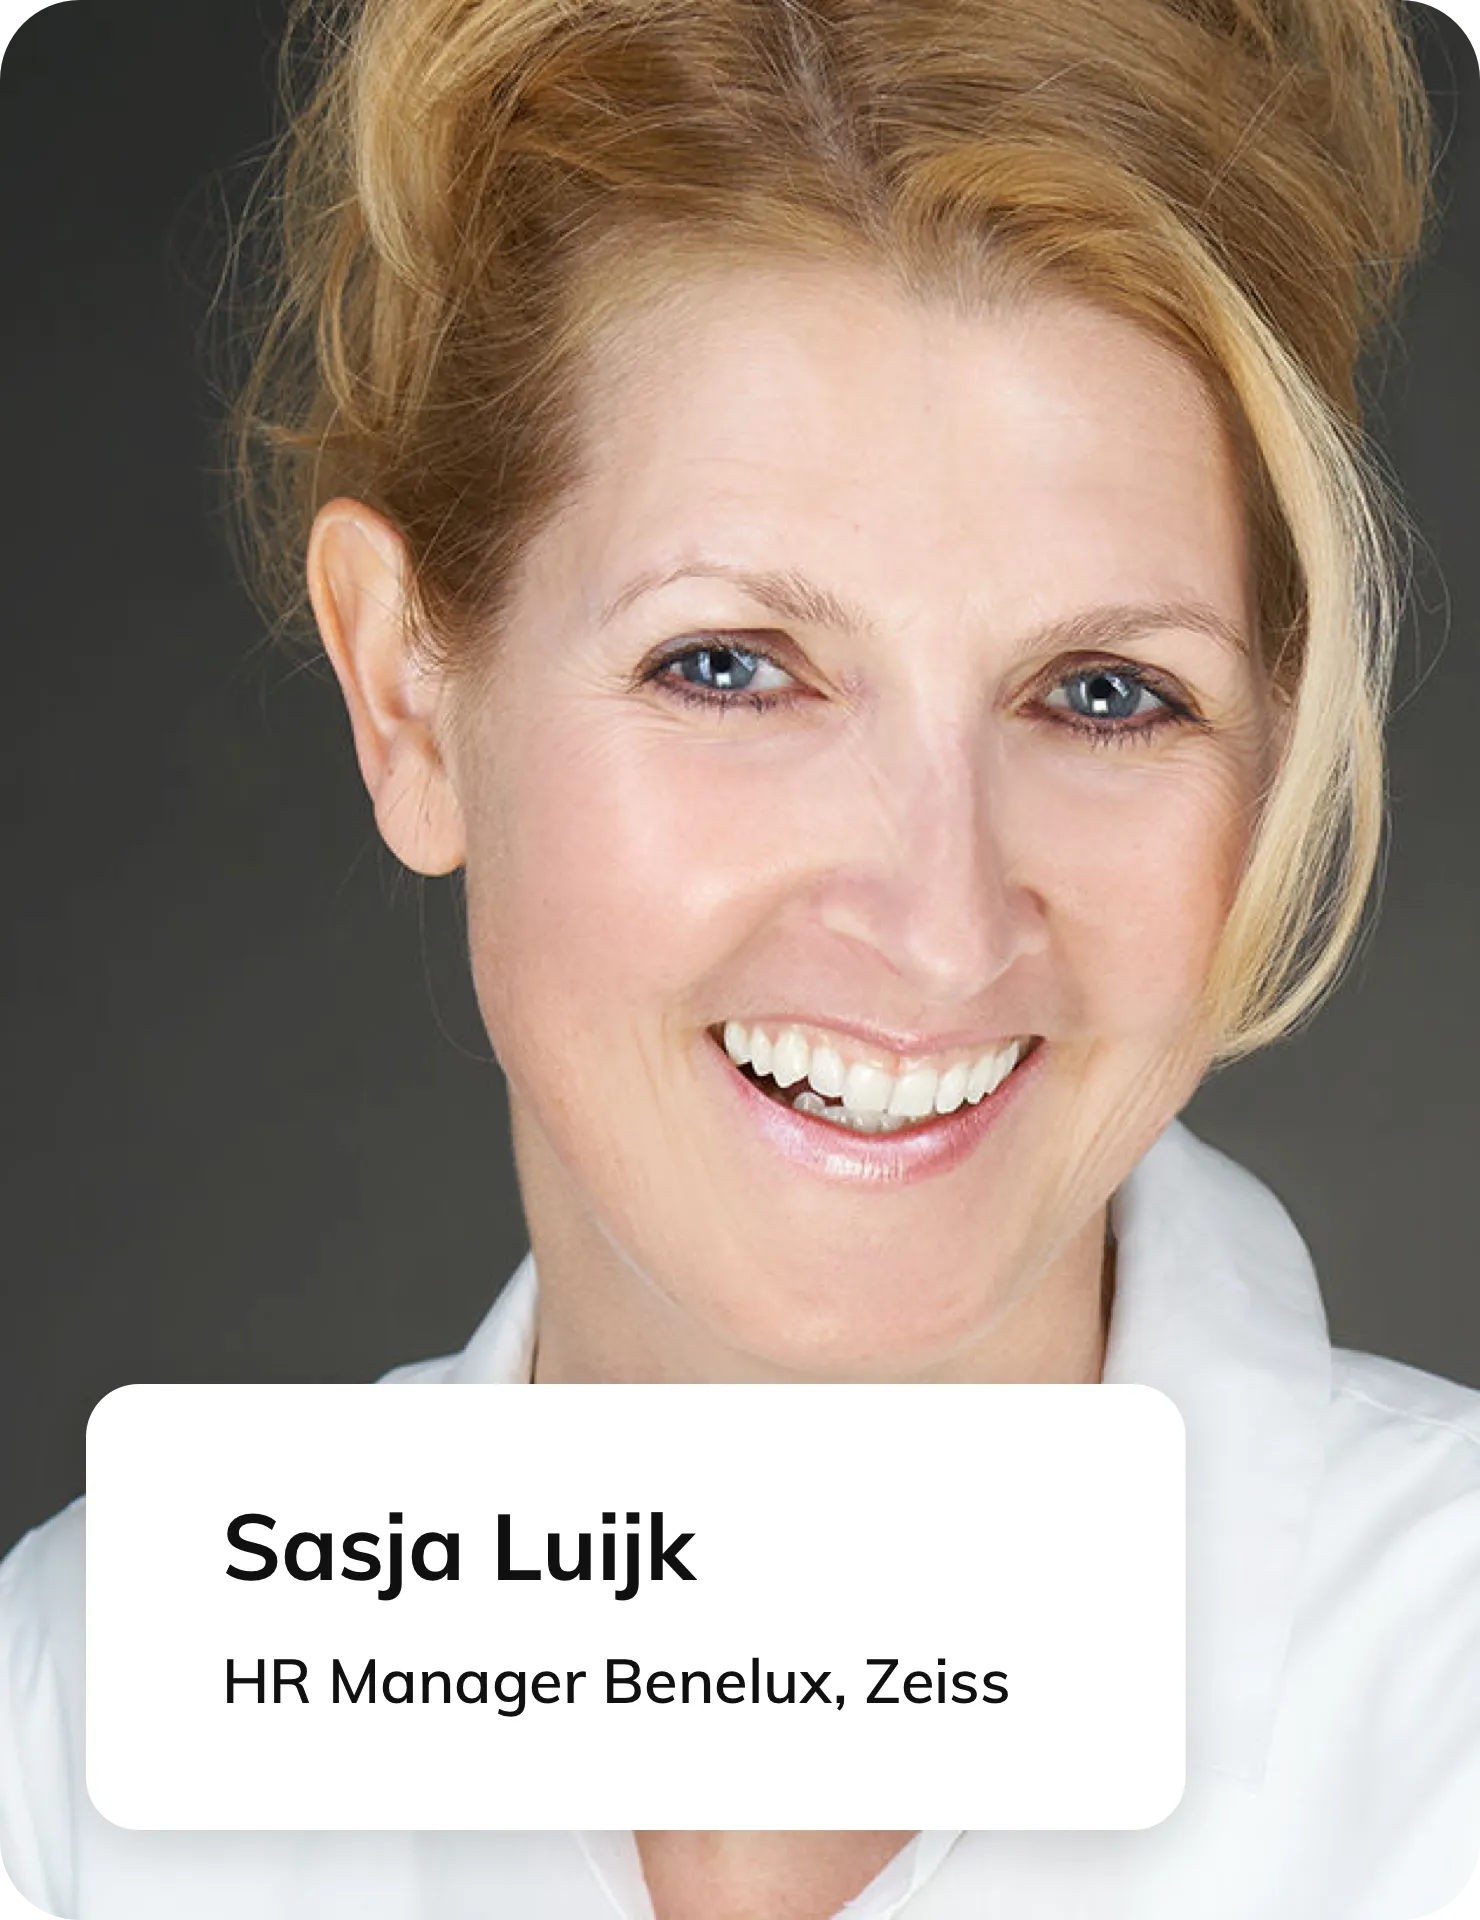 Sasja Luijk, HR Manager at Zeiss